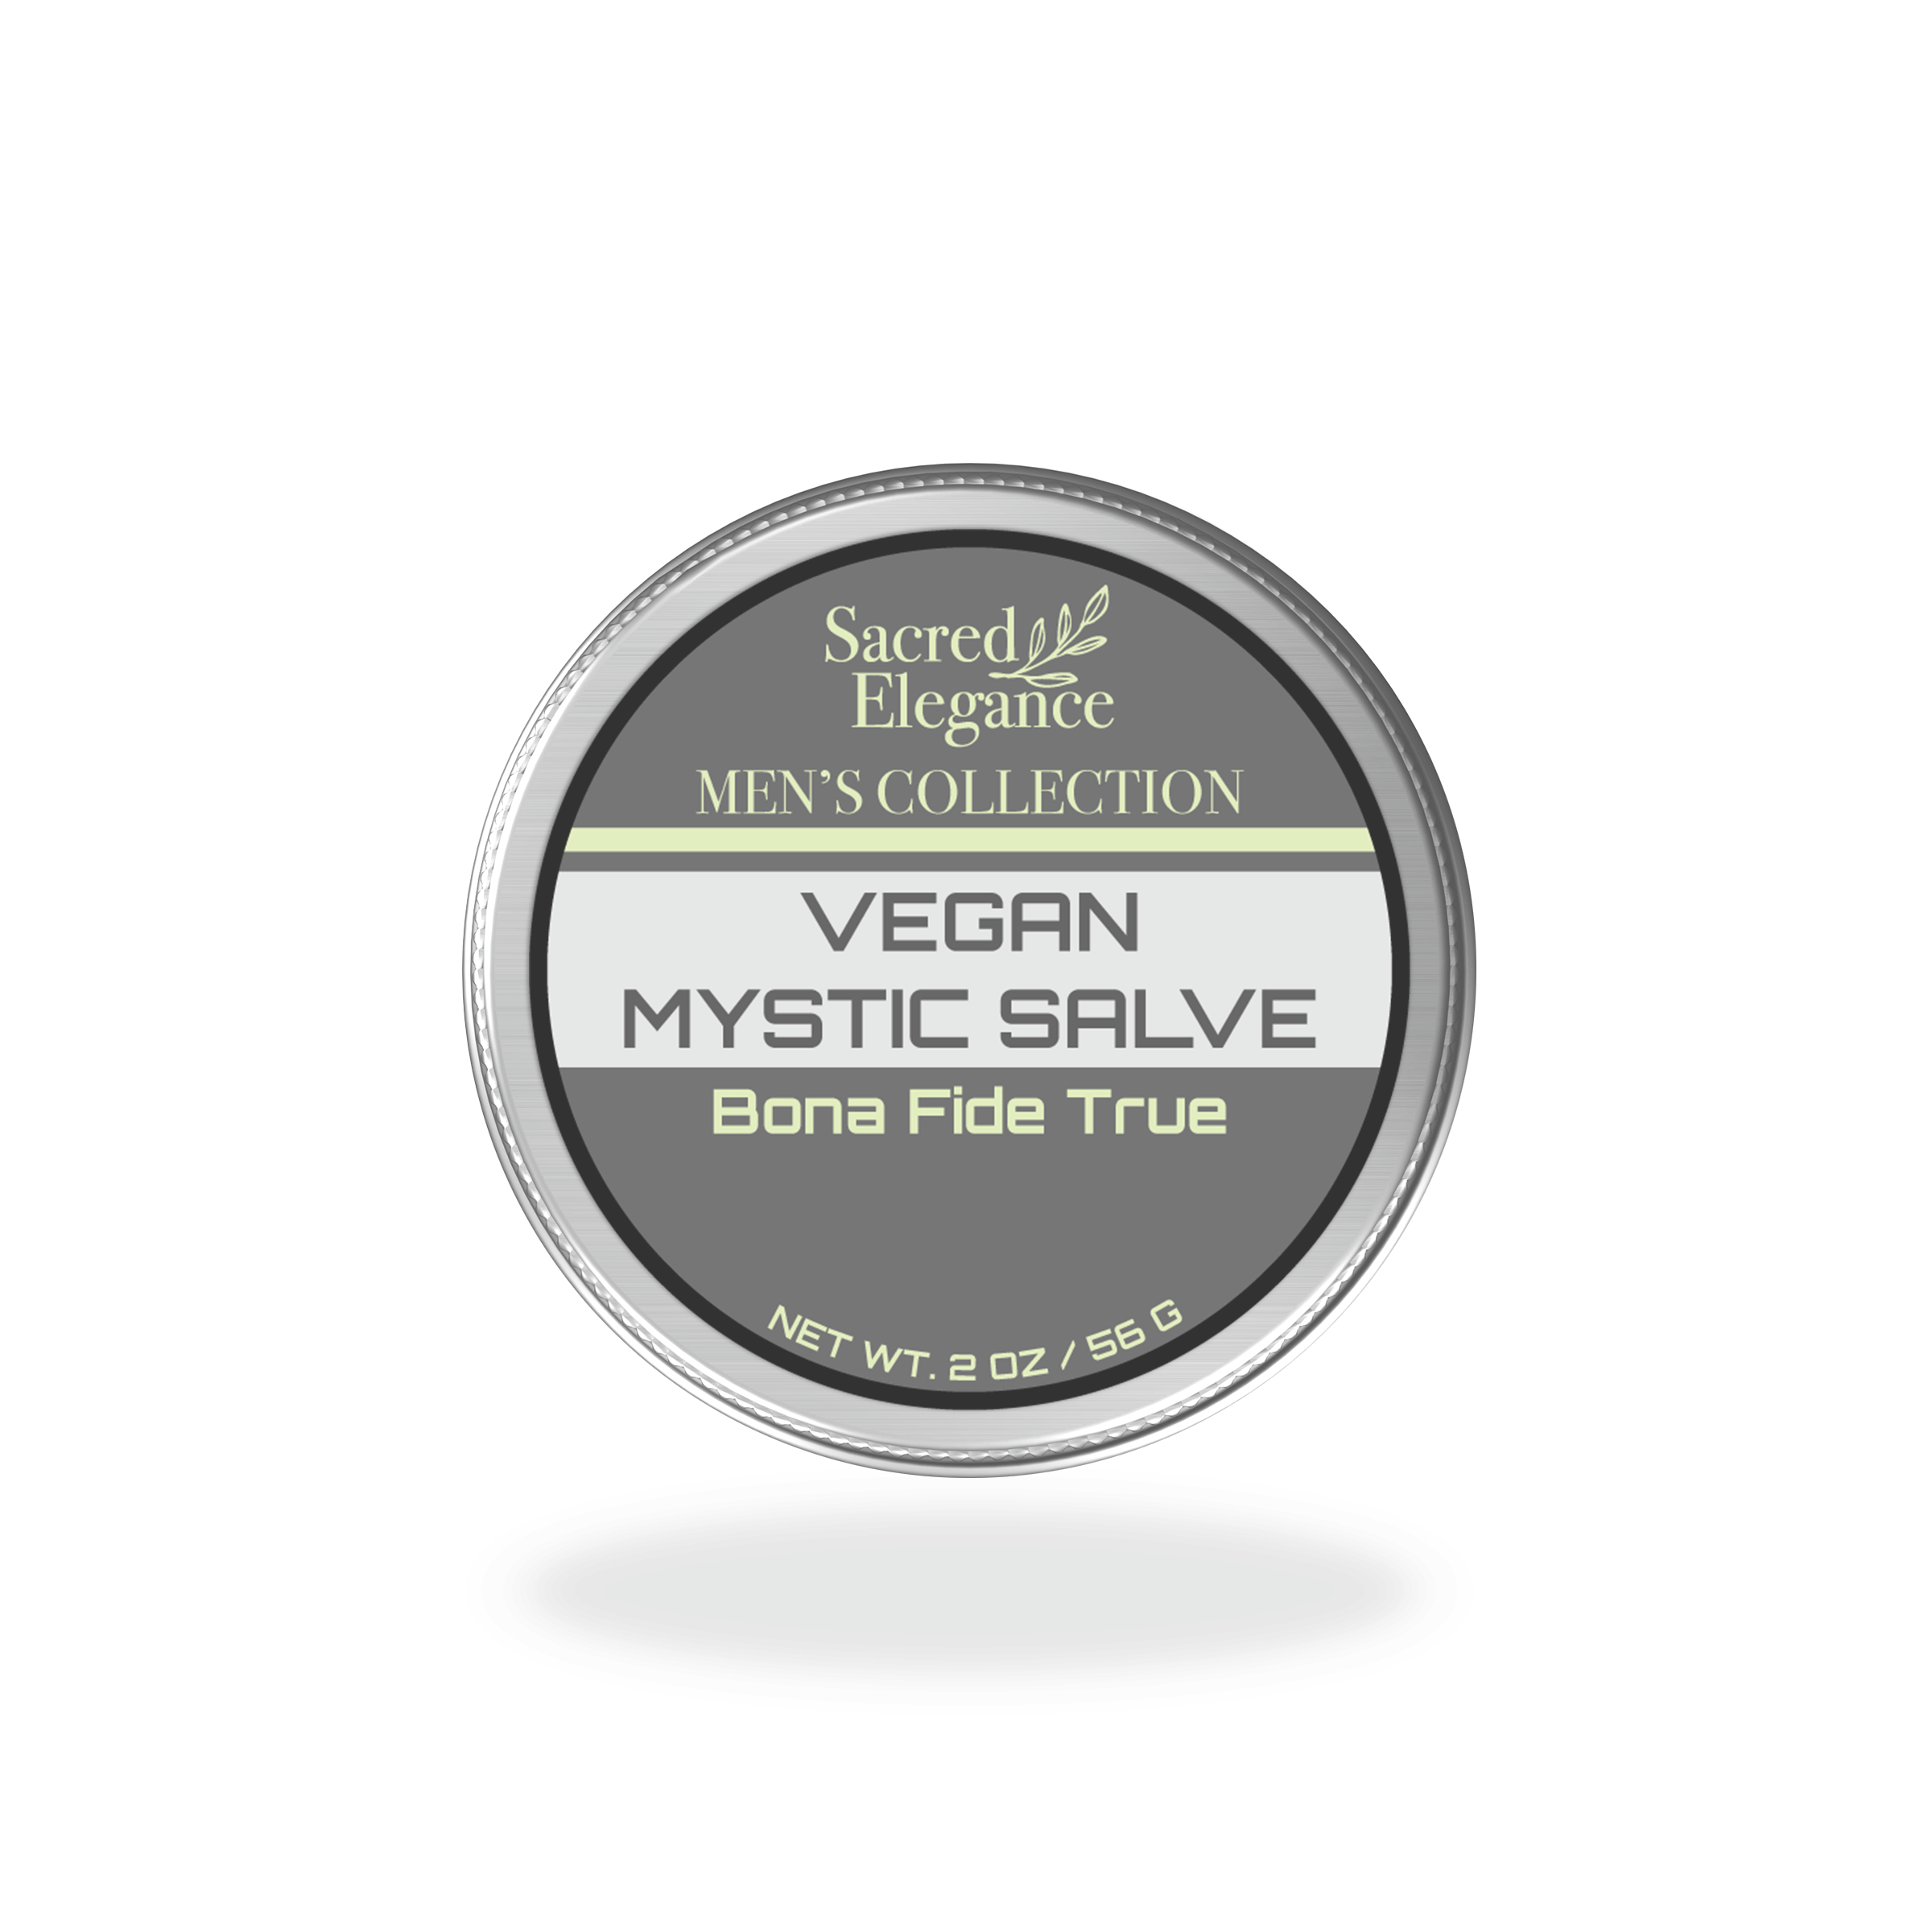 Bona Fide True Vegan Mystic Salve